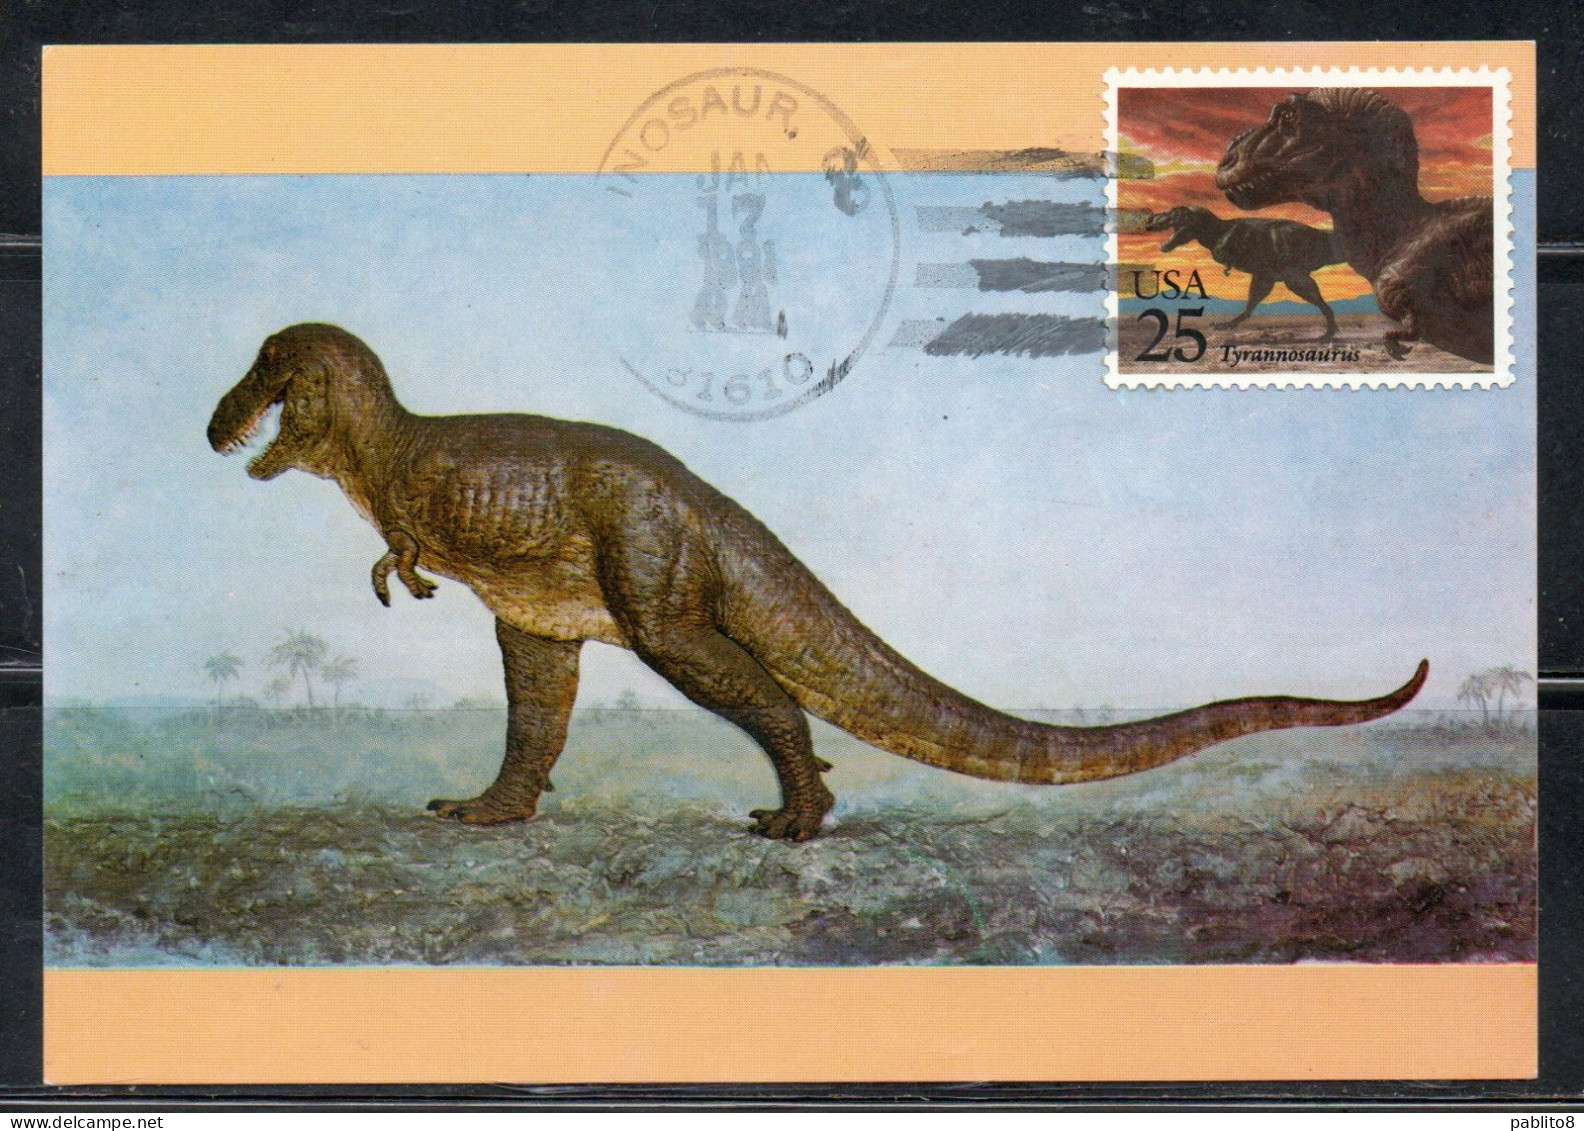 USA STATI UNITI 1989 PREHISTORIC ANIMALS TYRANNOSAURUS REX 25c MAXI MAXIMUM CARD CARTE CARTOLINA - Cartes-Maximum (CM)